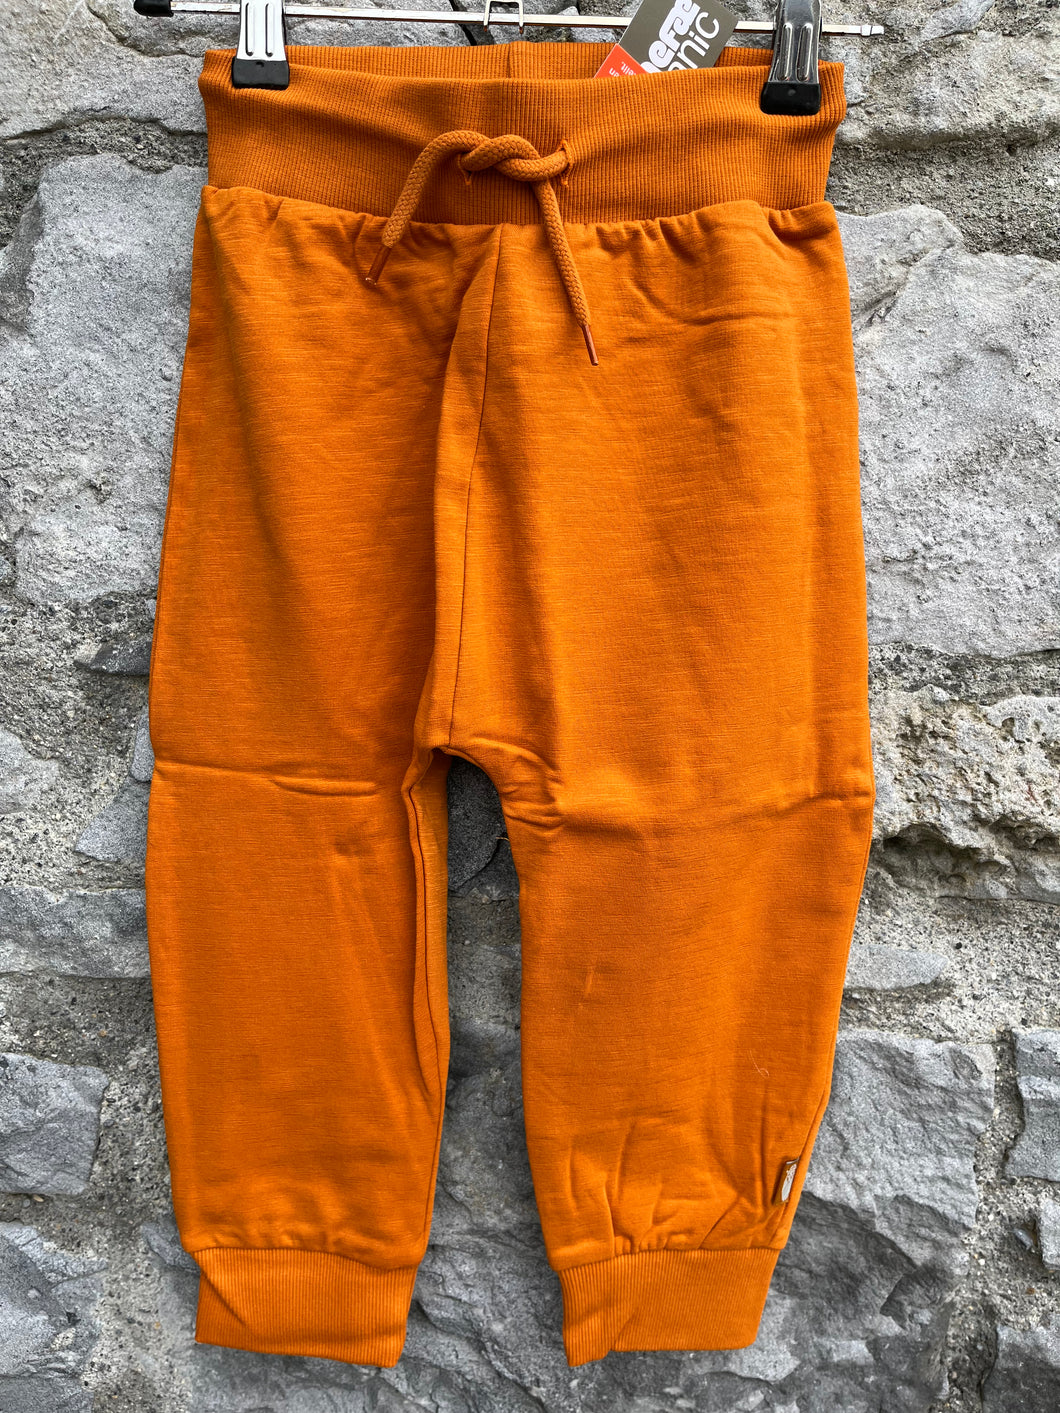 Orange pants  18m (86cm)